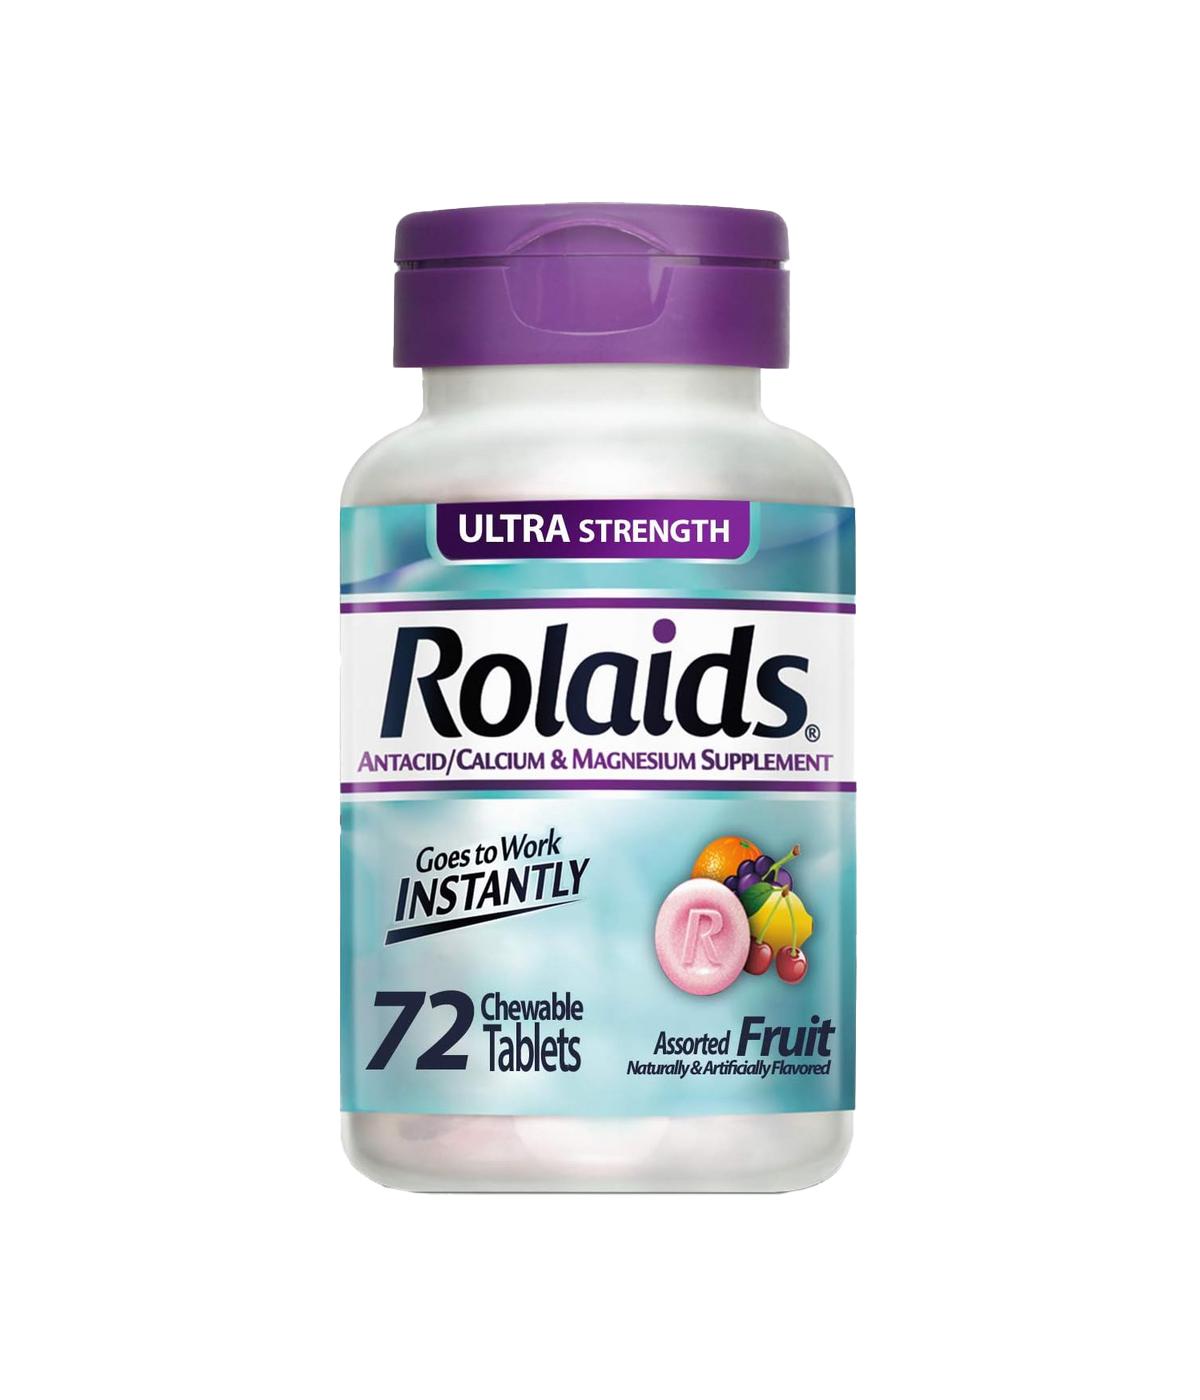 Rolaids Ultra Strength Antacid Tablets - Assorted Fruit; image 1 of 2